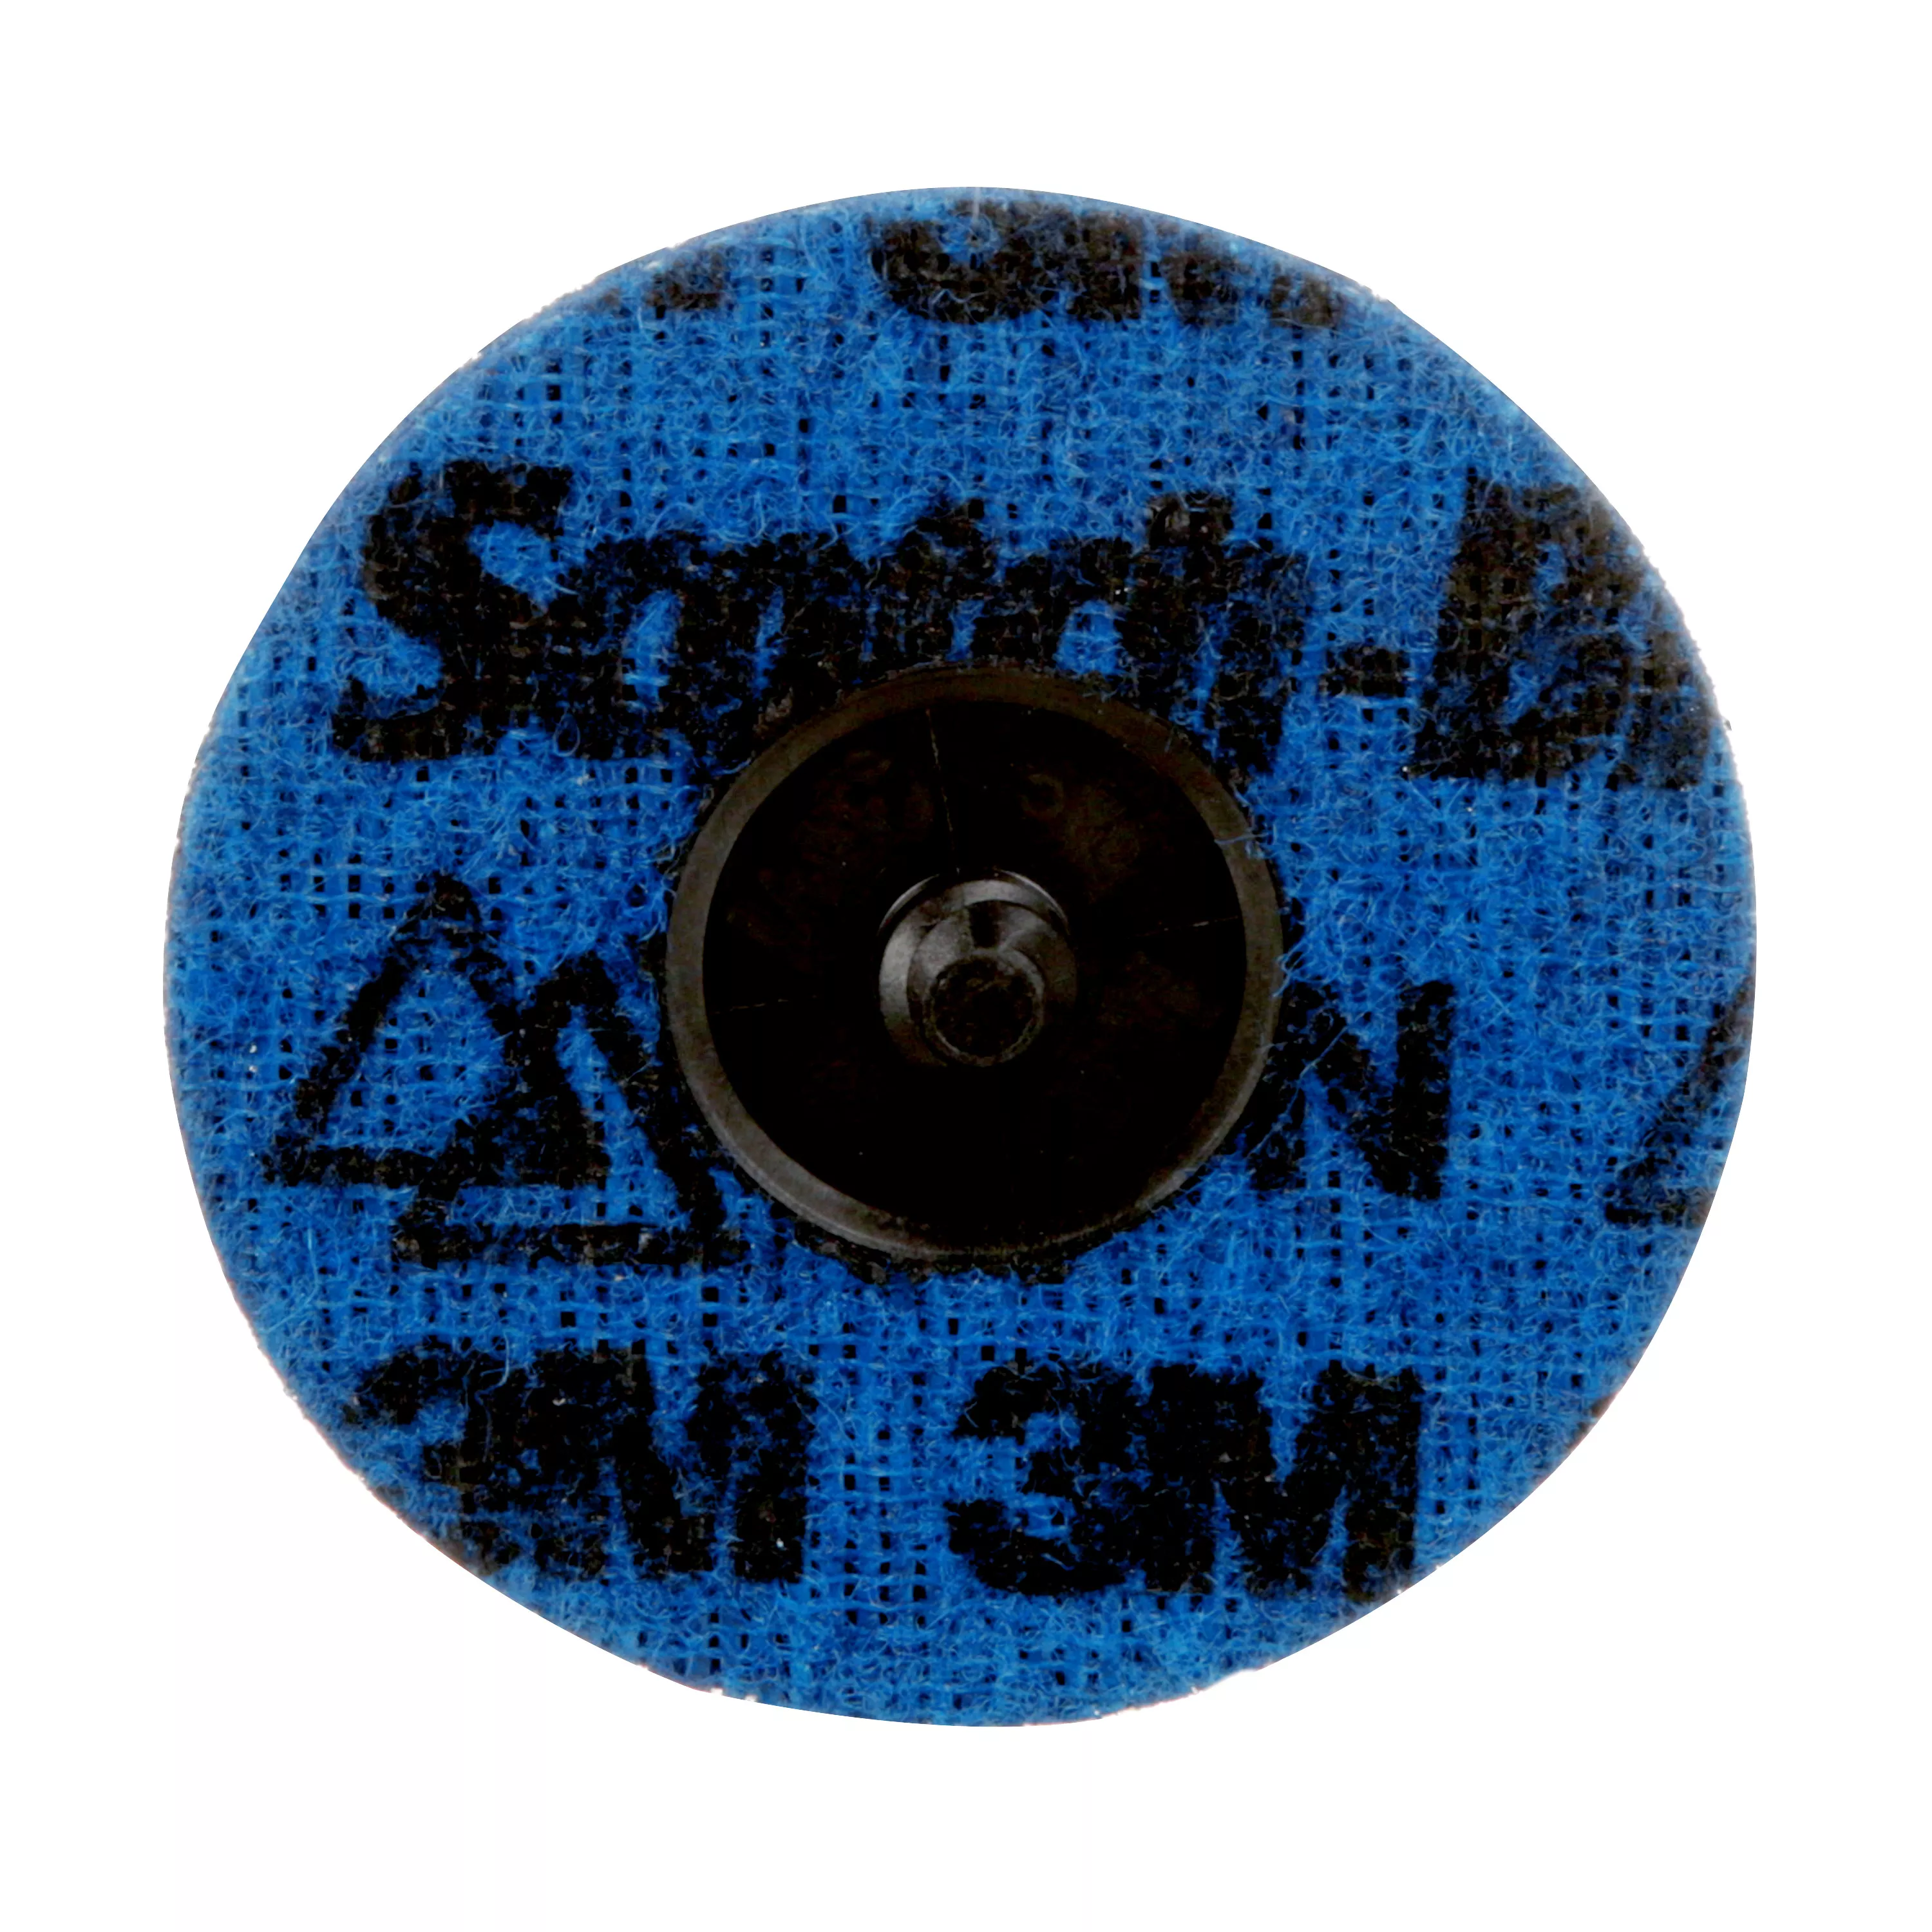 SKU 7100264194 | Scotch-Brite™ Roloc™ Precision Surface Conditioning Disc